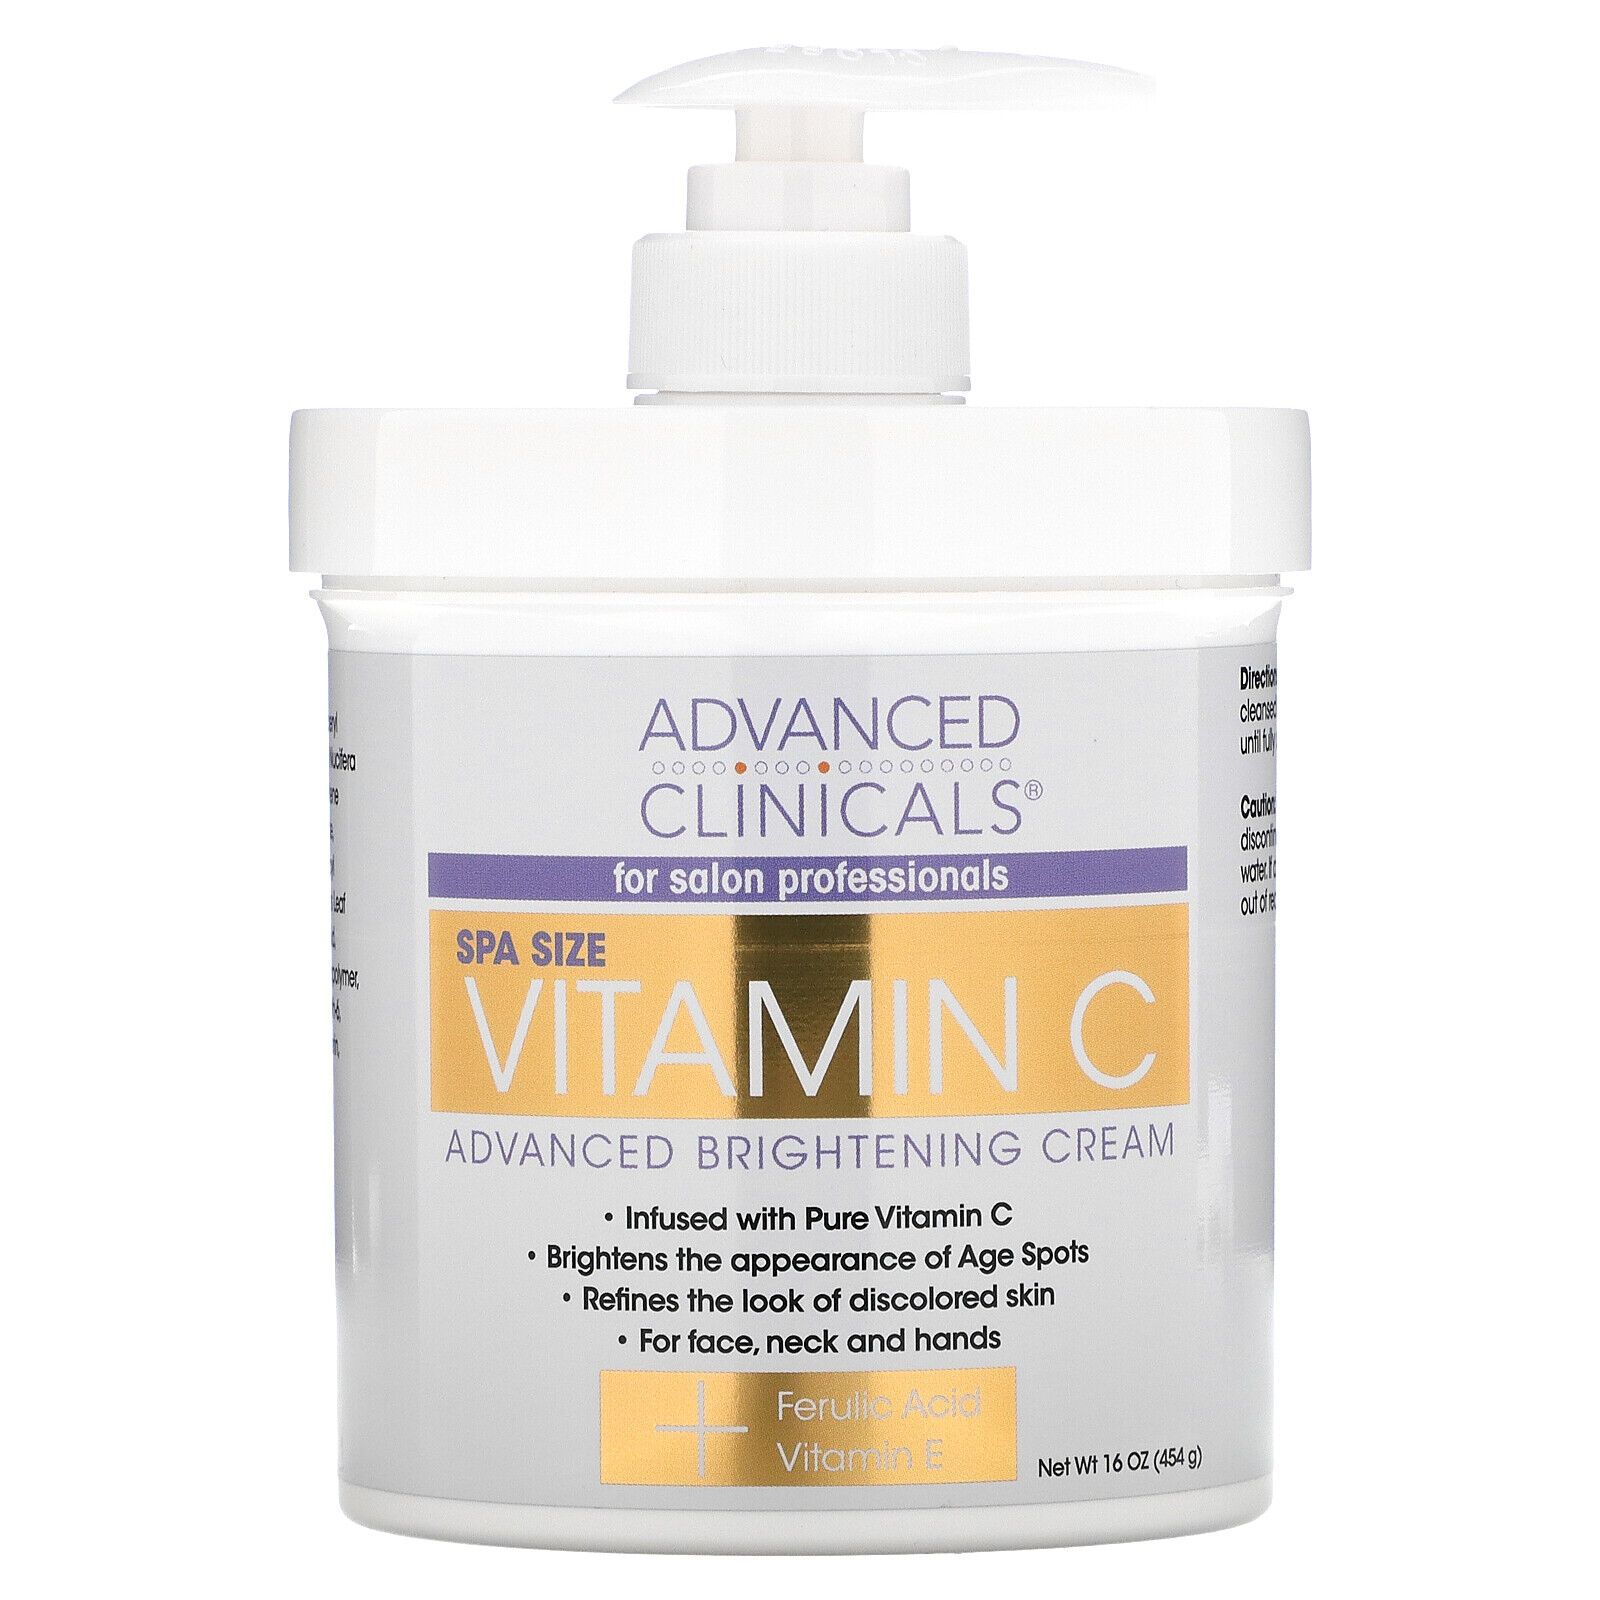 Advanced Brightening Cream, Vitamin C 16 oz (454 g)